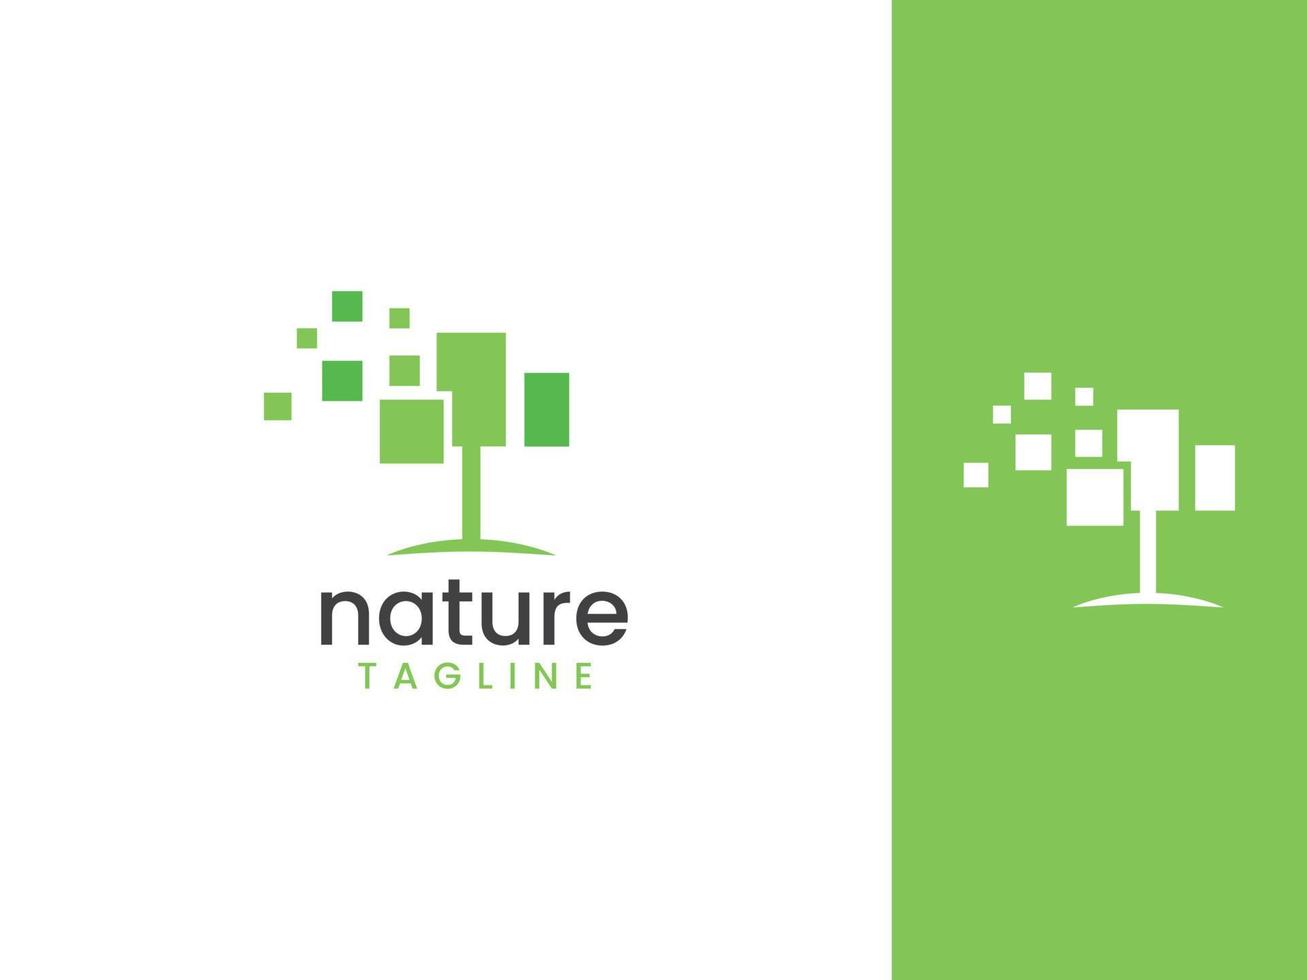 grüne Baum-Pixel-Logo-Vorlage, Natur-Pixel-Logo vektor